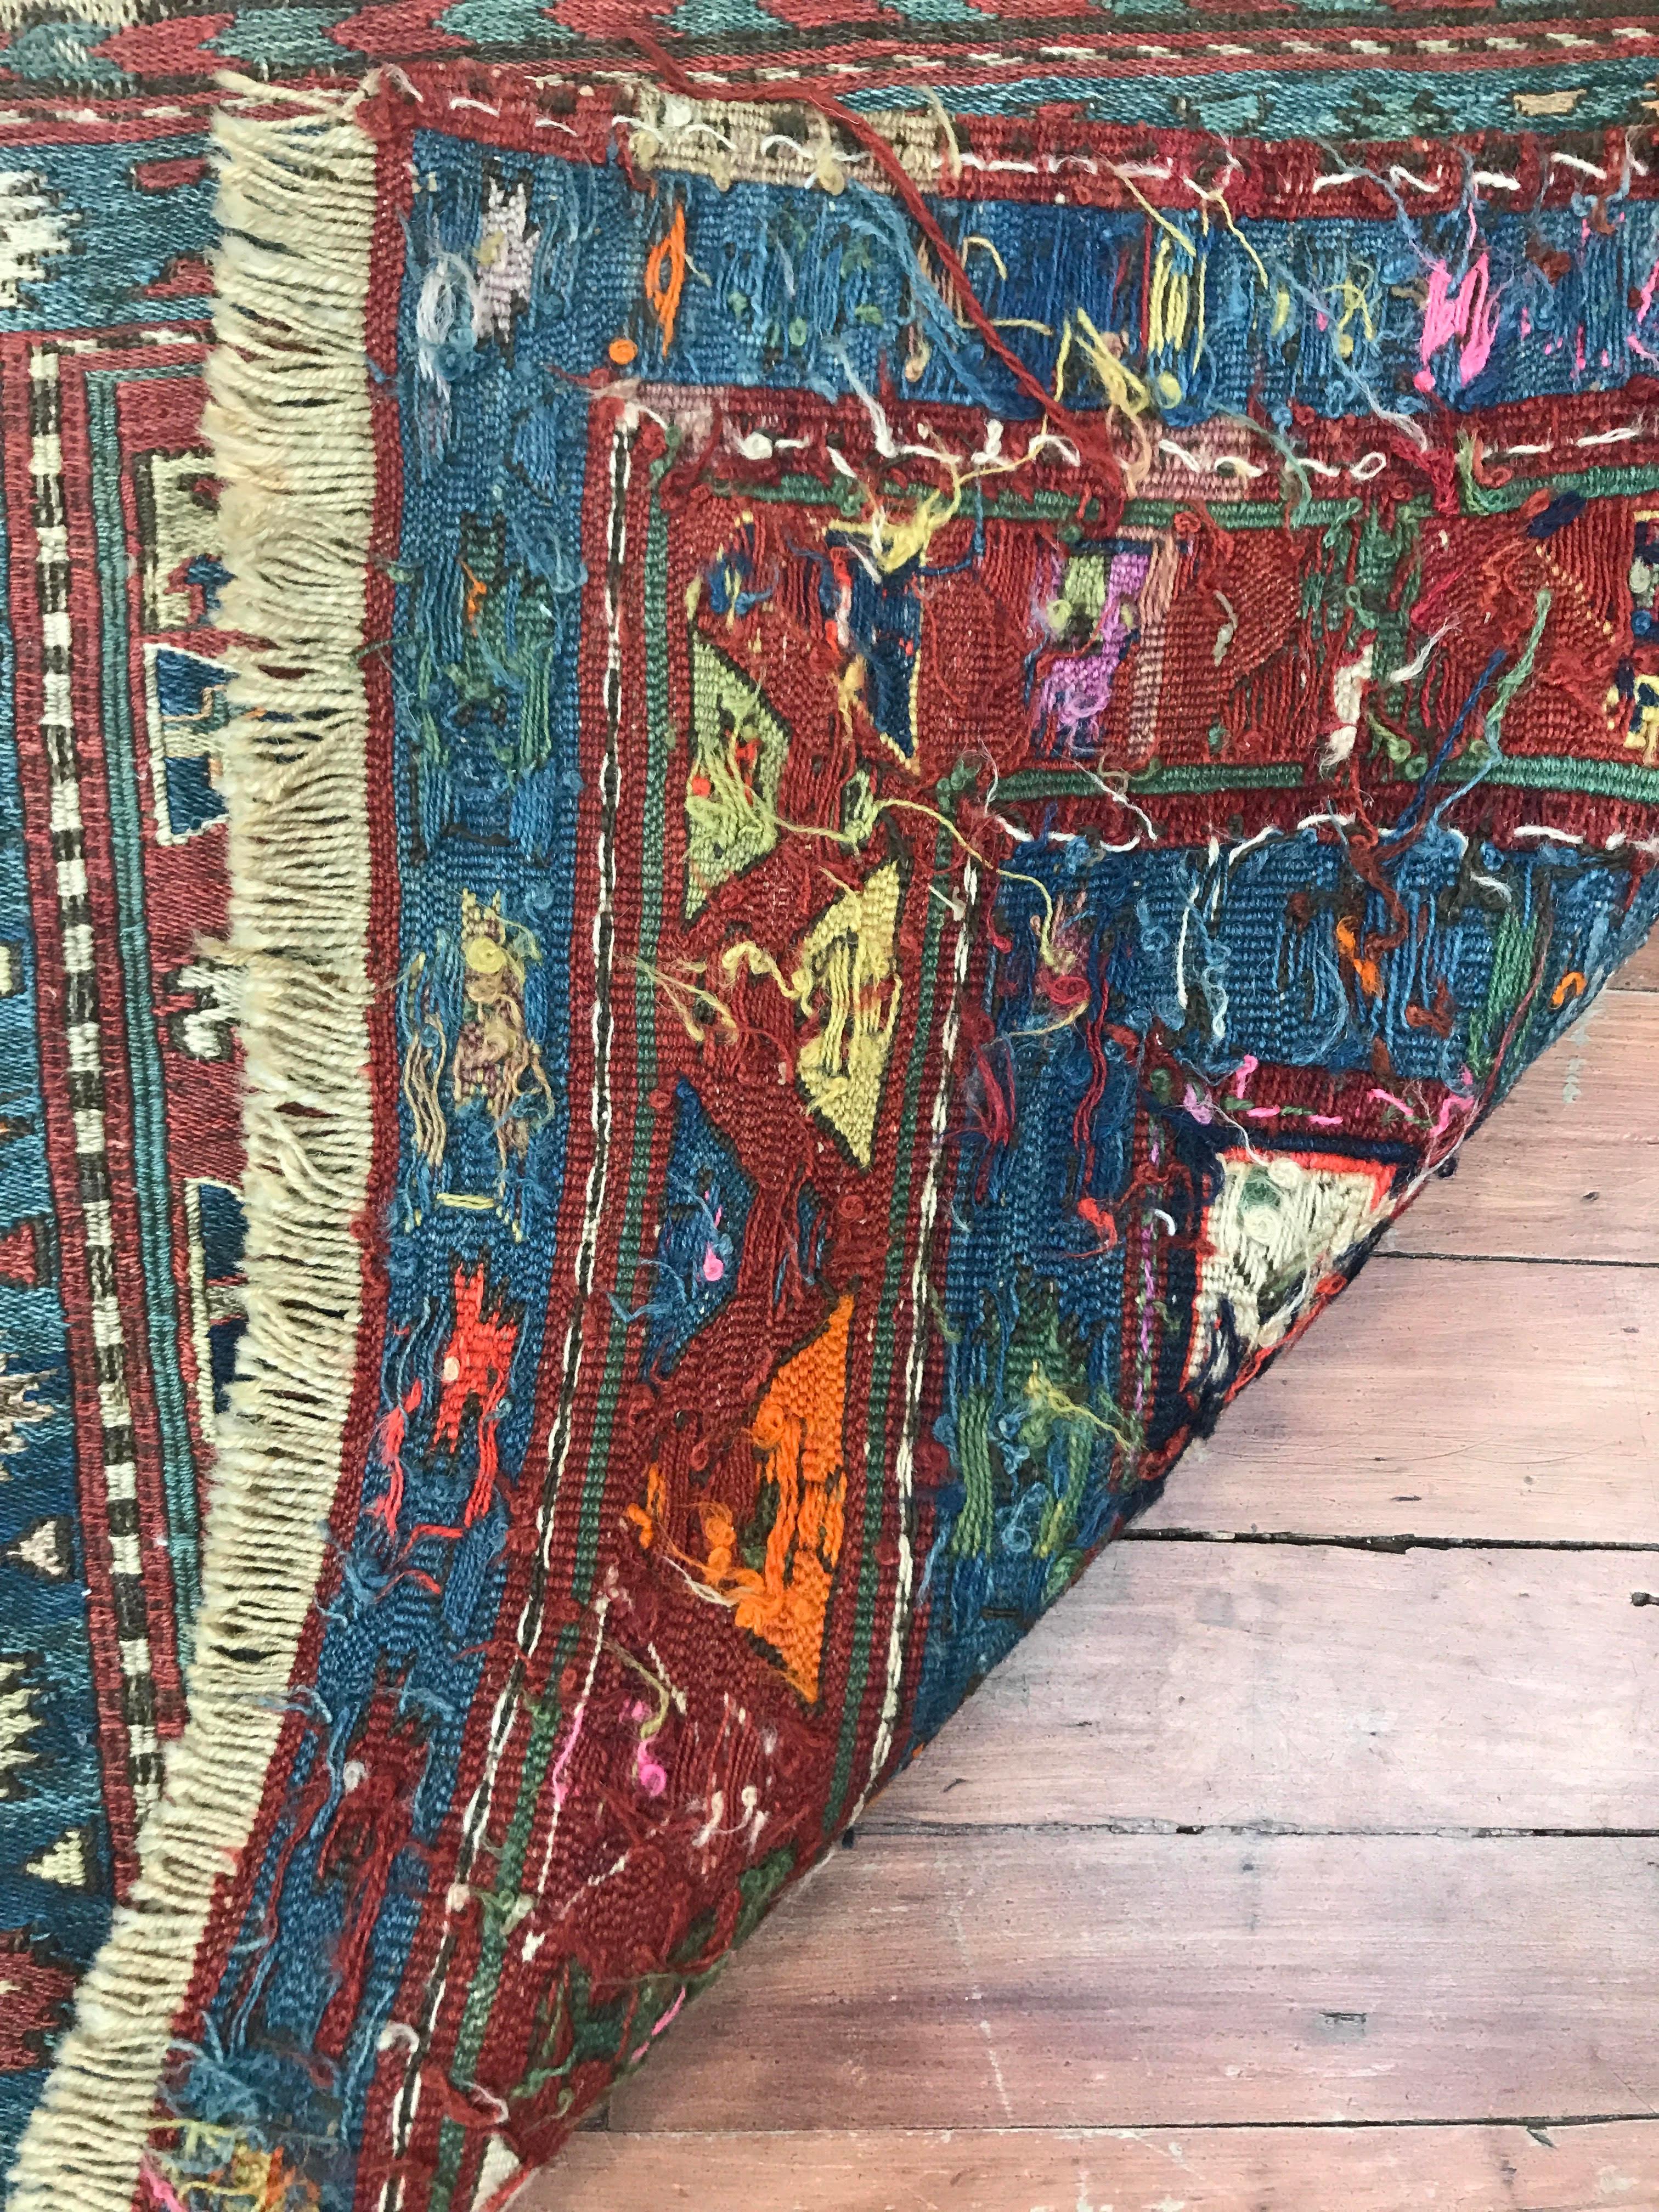 19th century Persian Soumak soumac tribal rug rug. Aqua, Teal, soft red, and cream accents

Measures: 1'7'' x 1'9''.